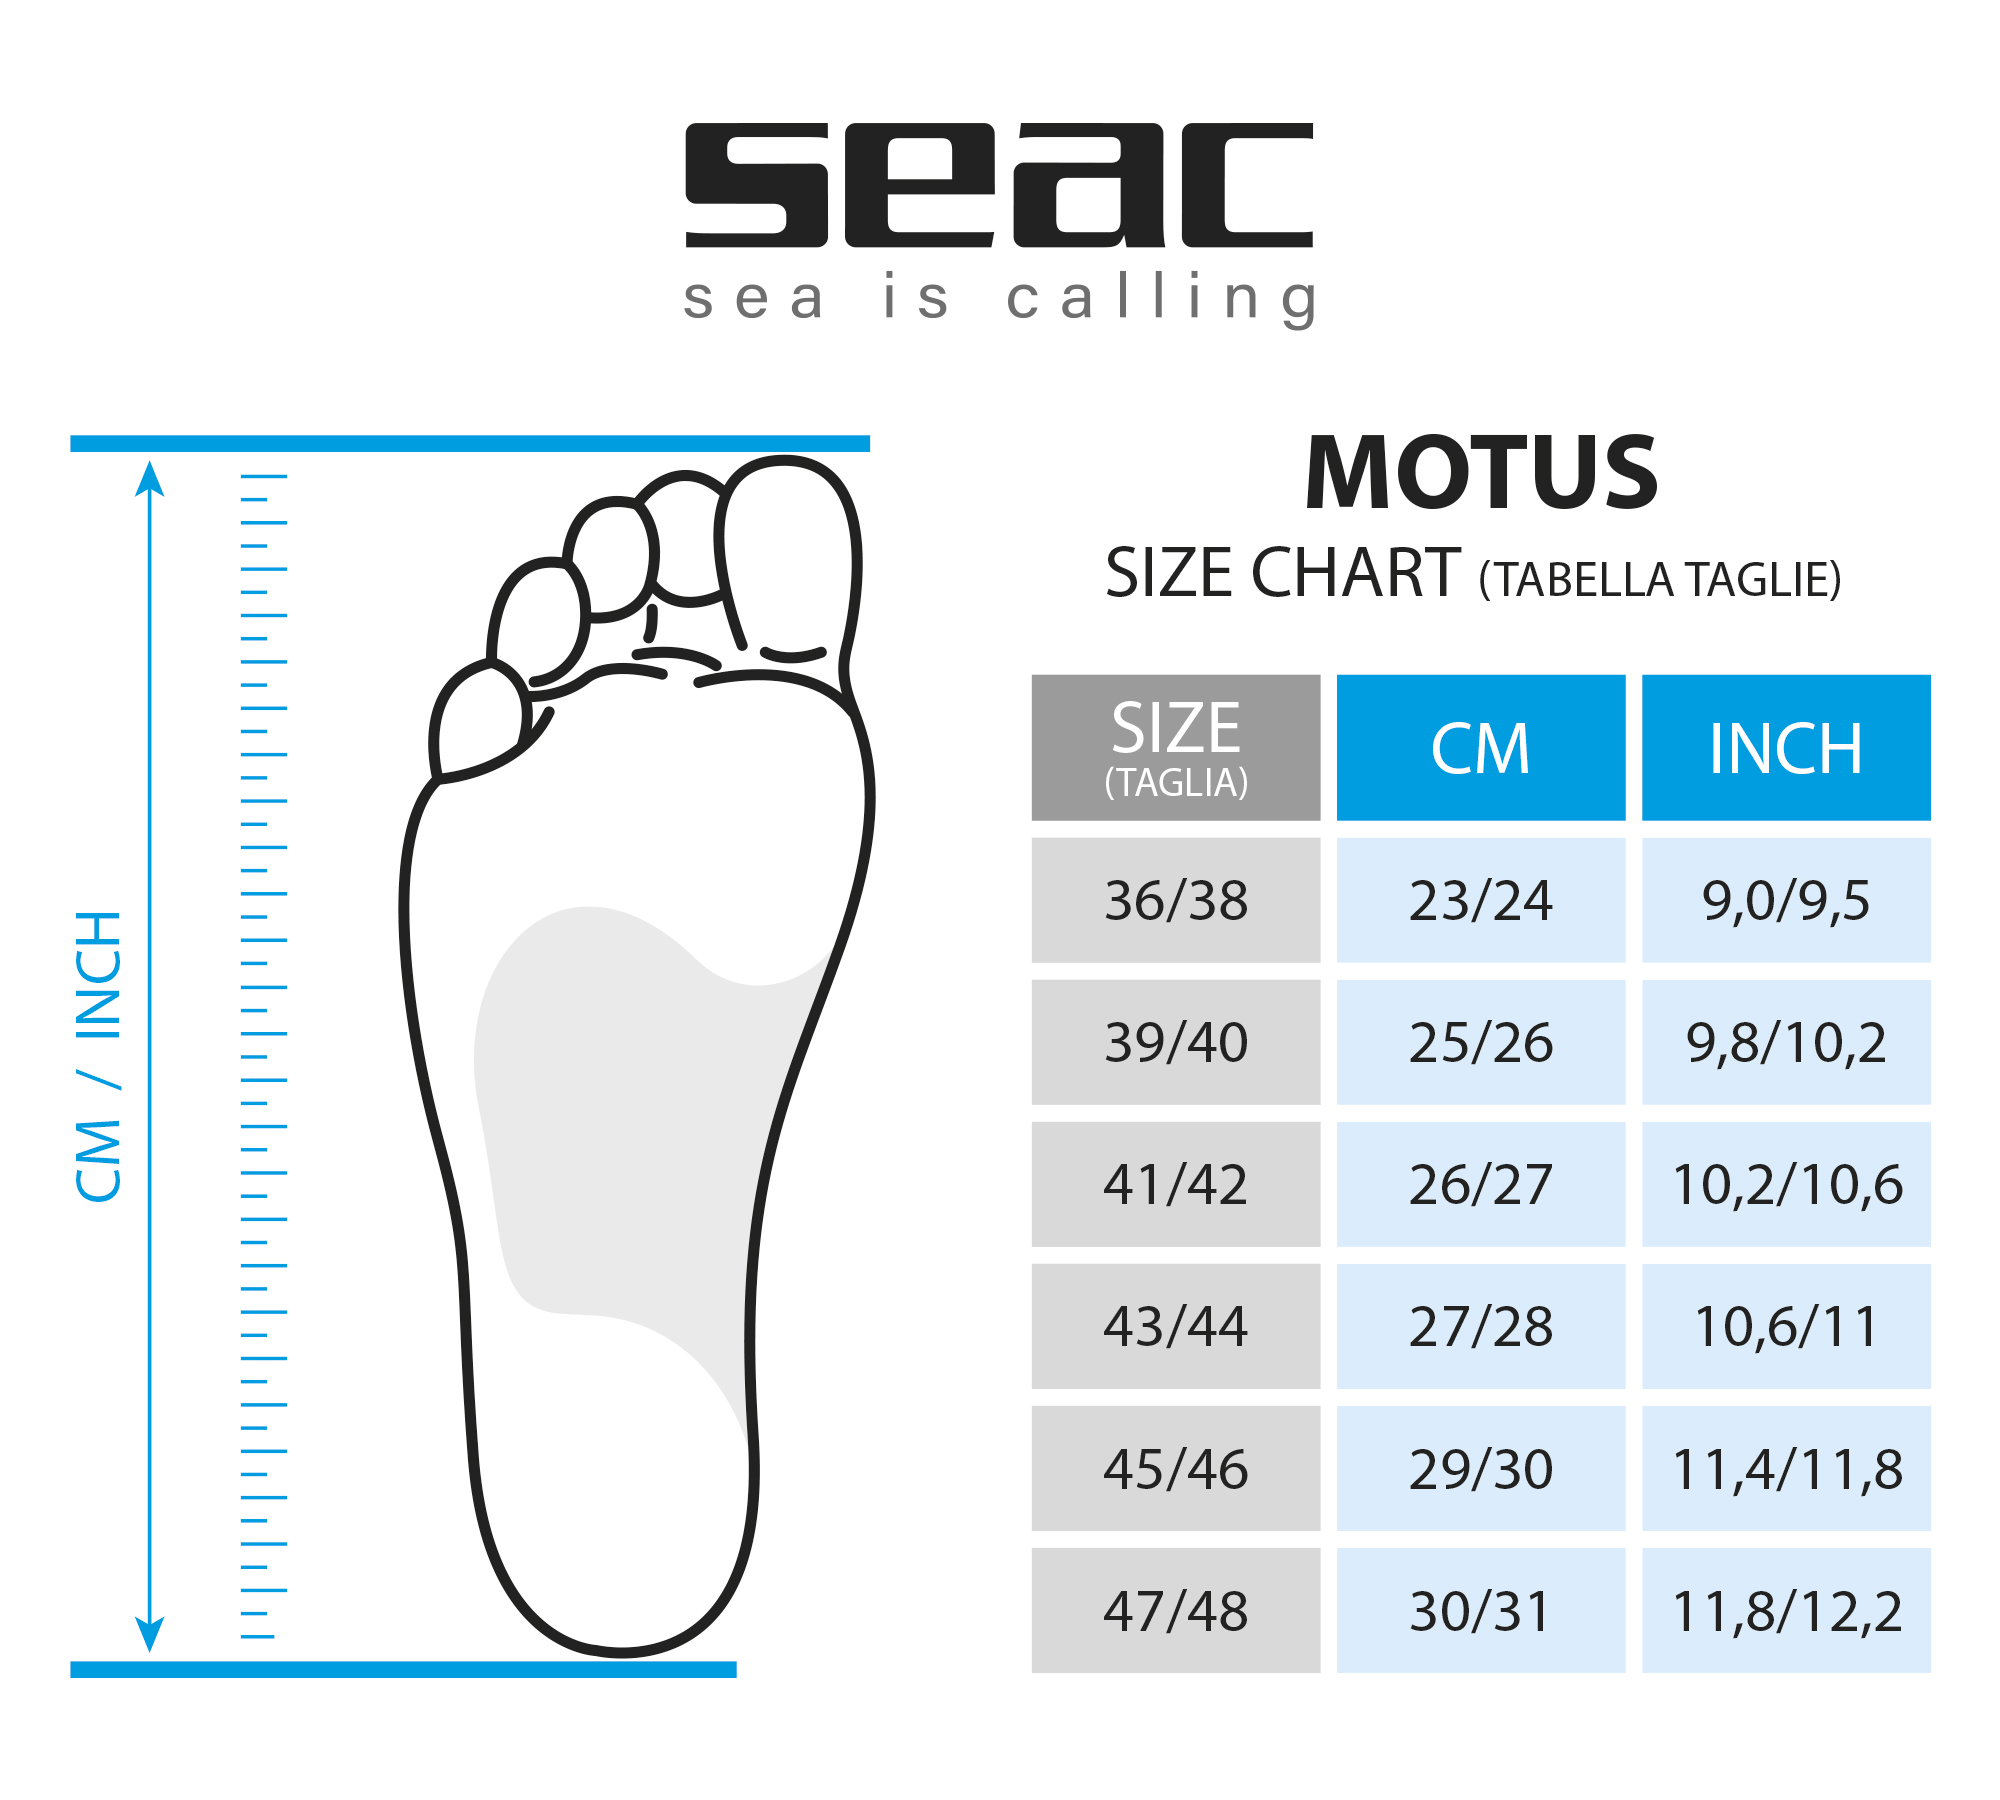 Seac Motus Size Chart